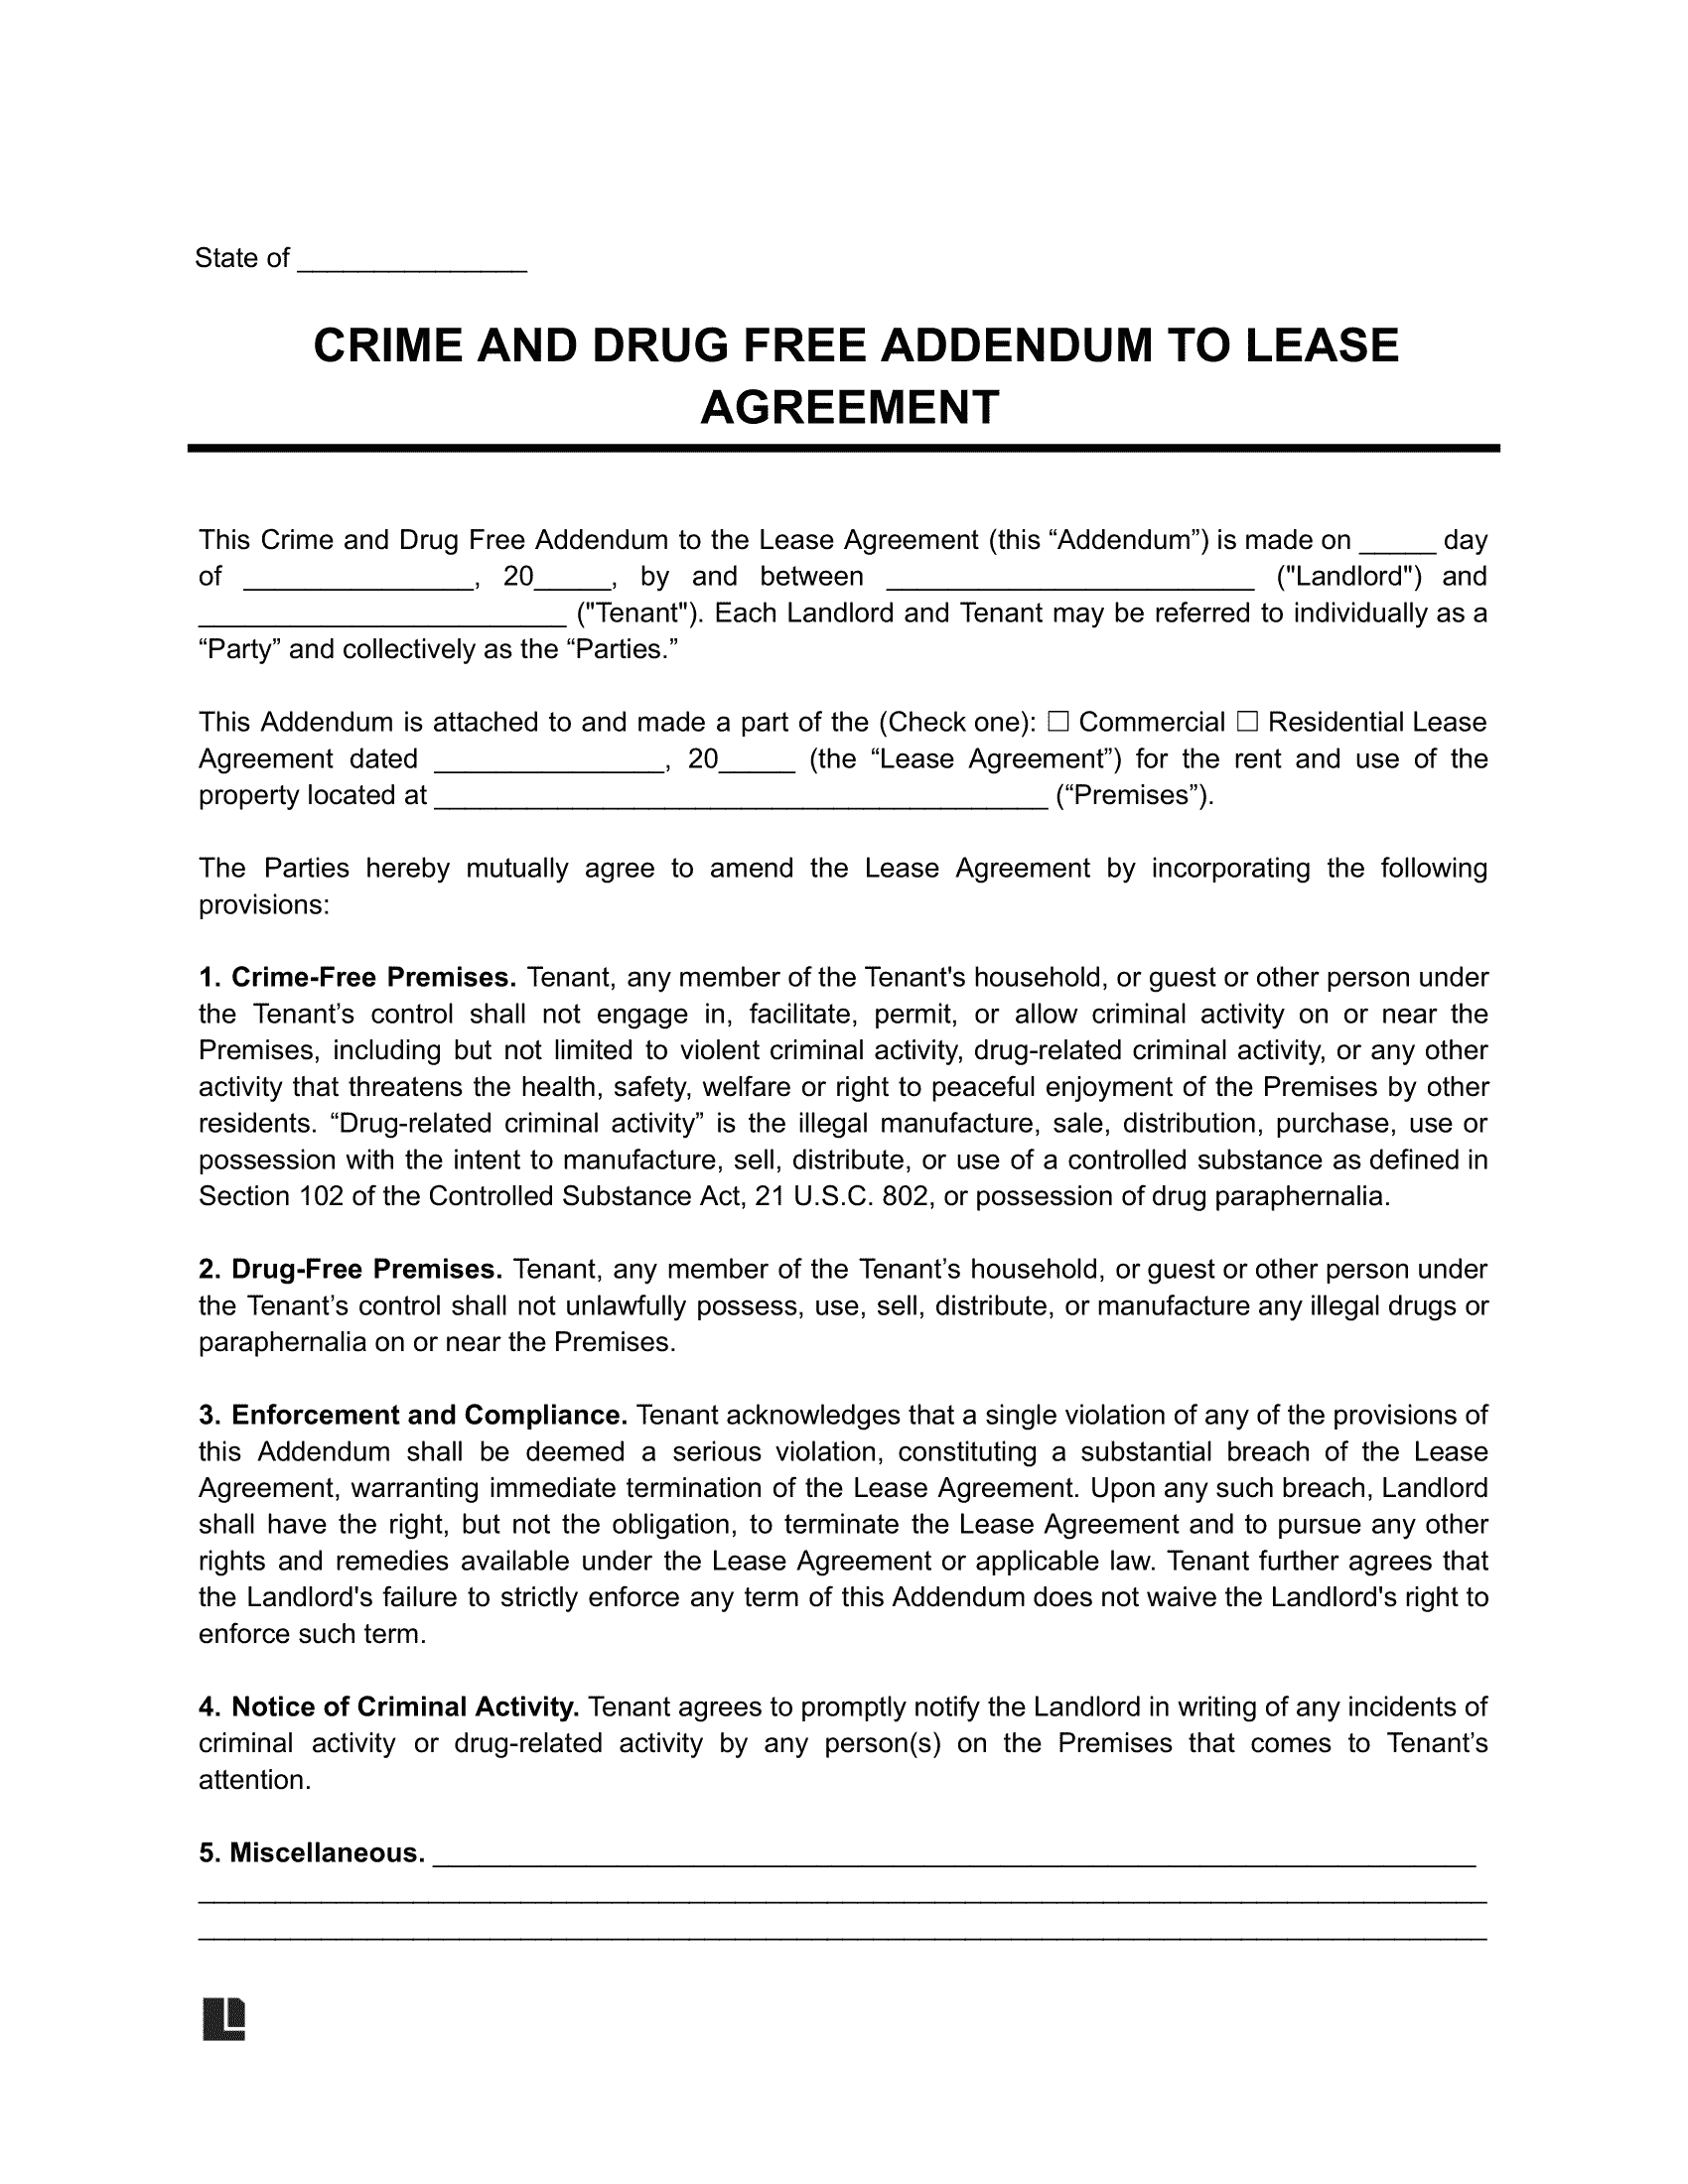 crime and drug free lease addendum template